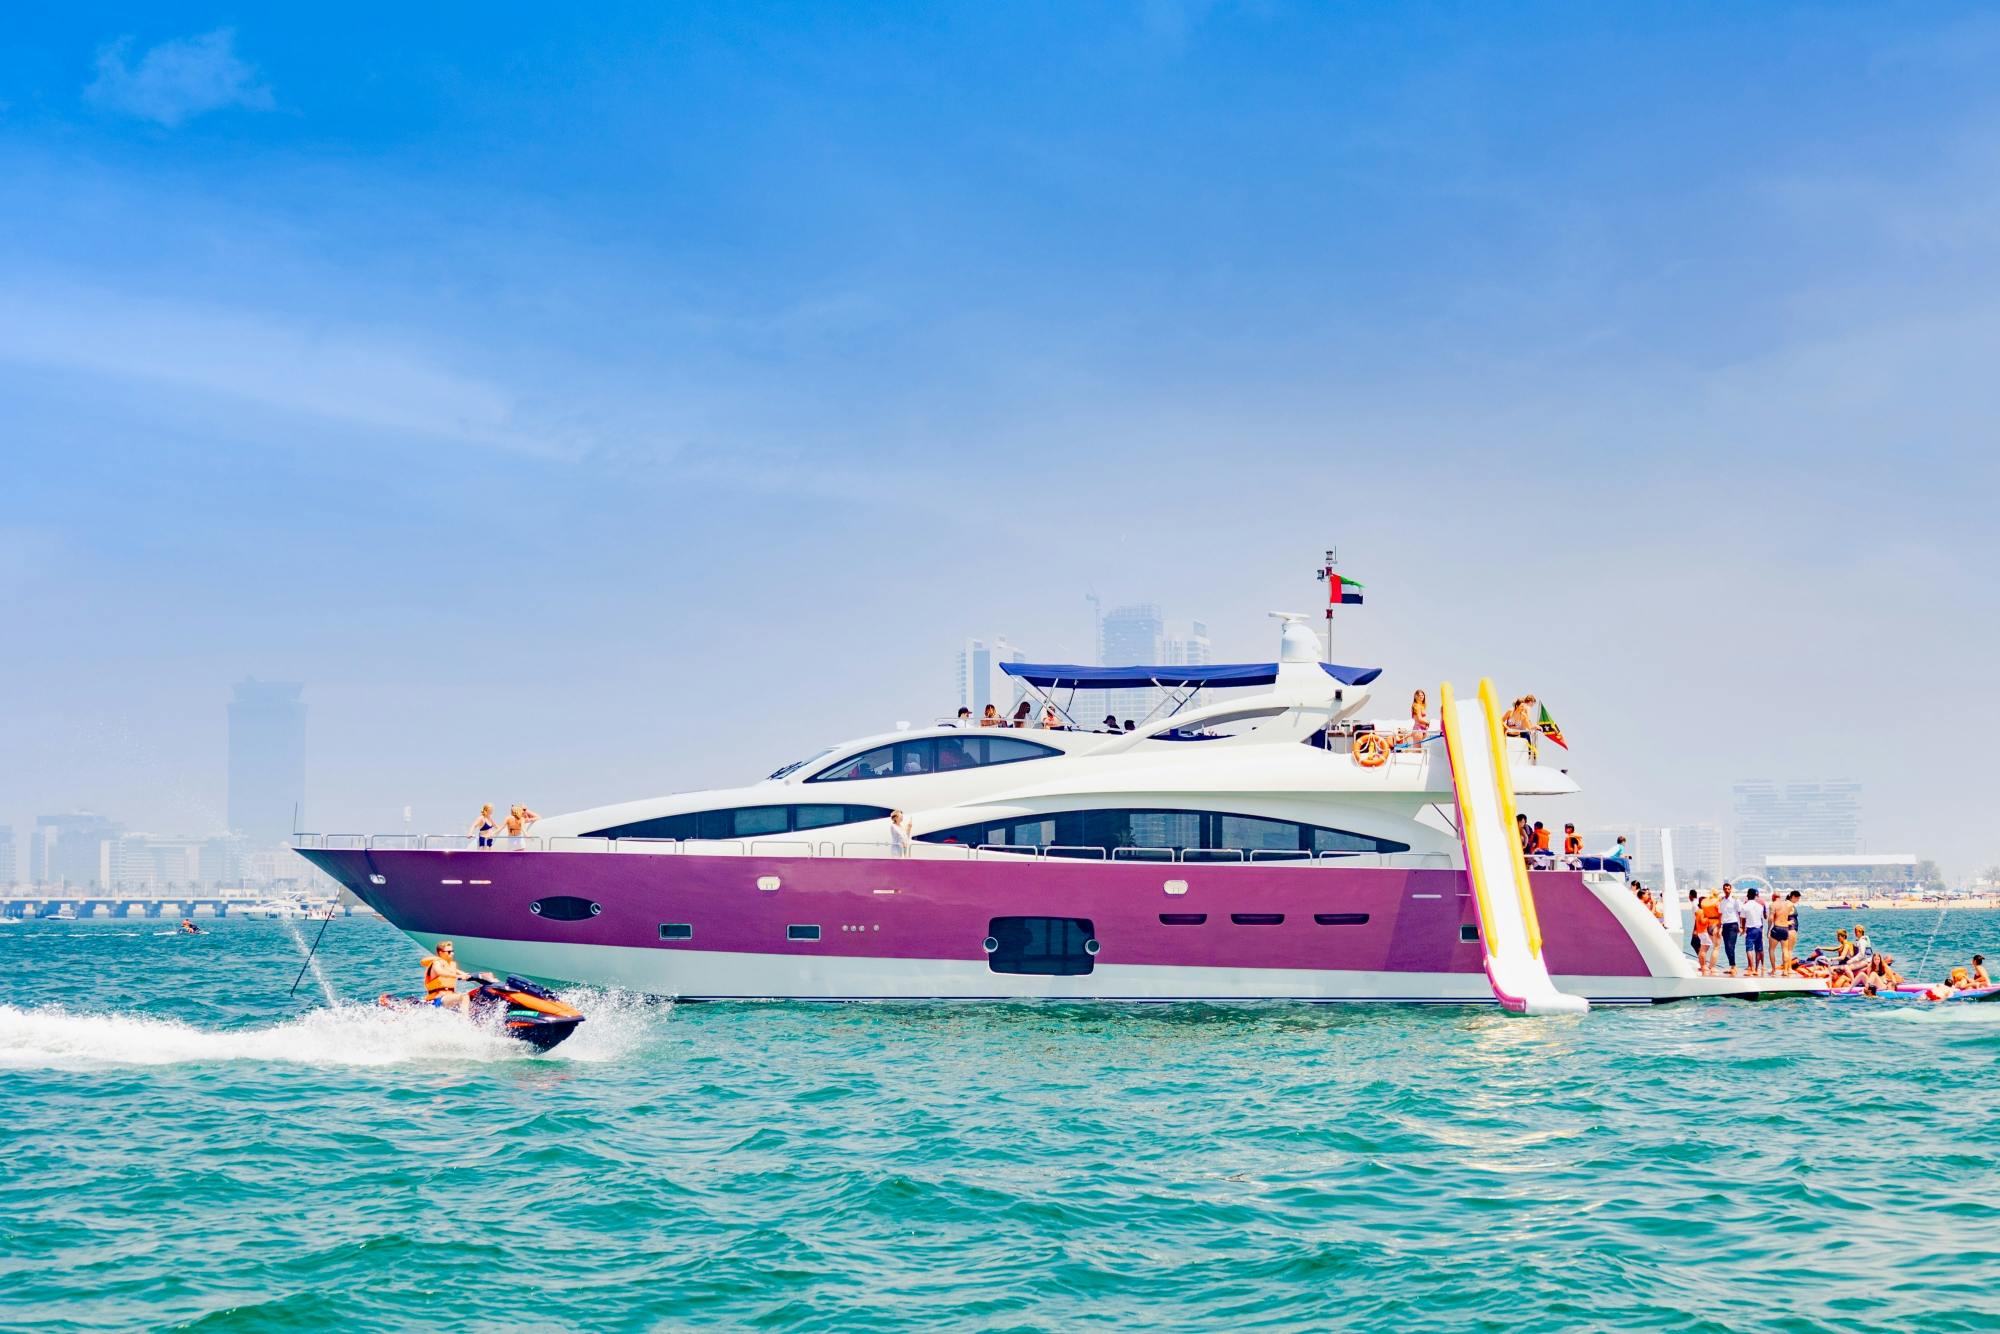 Dubai 4-hour ride and slide experience on a luxury yacht